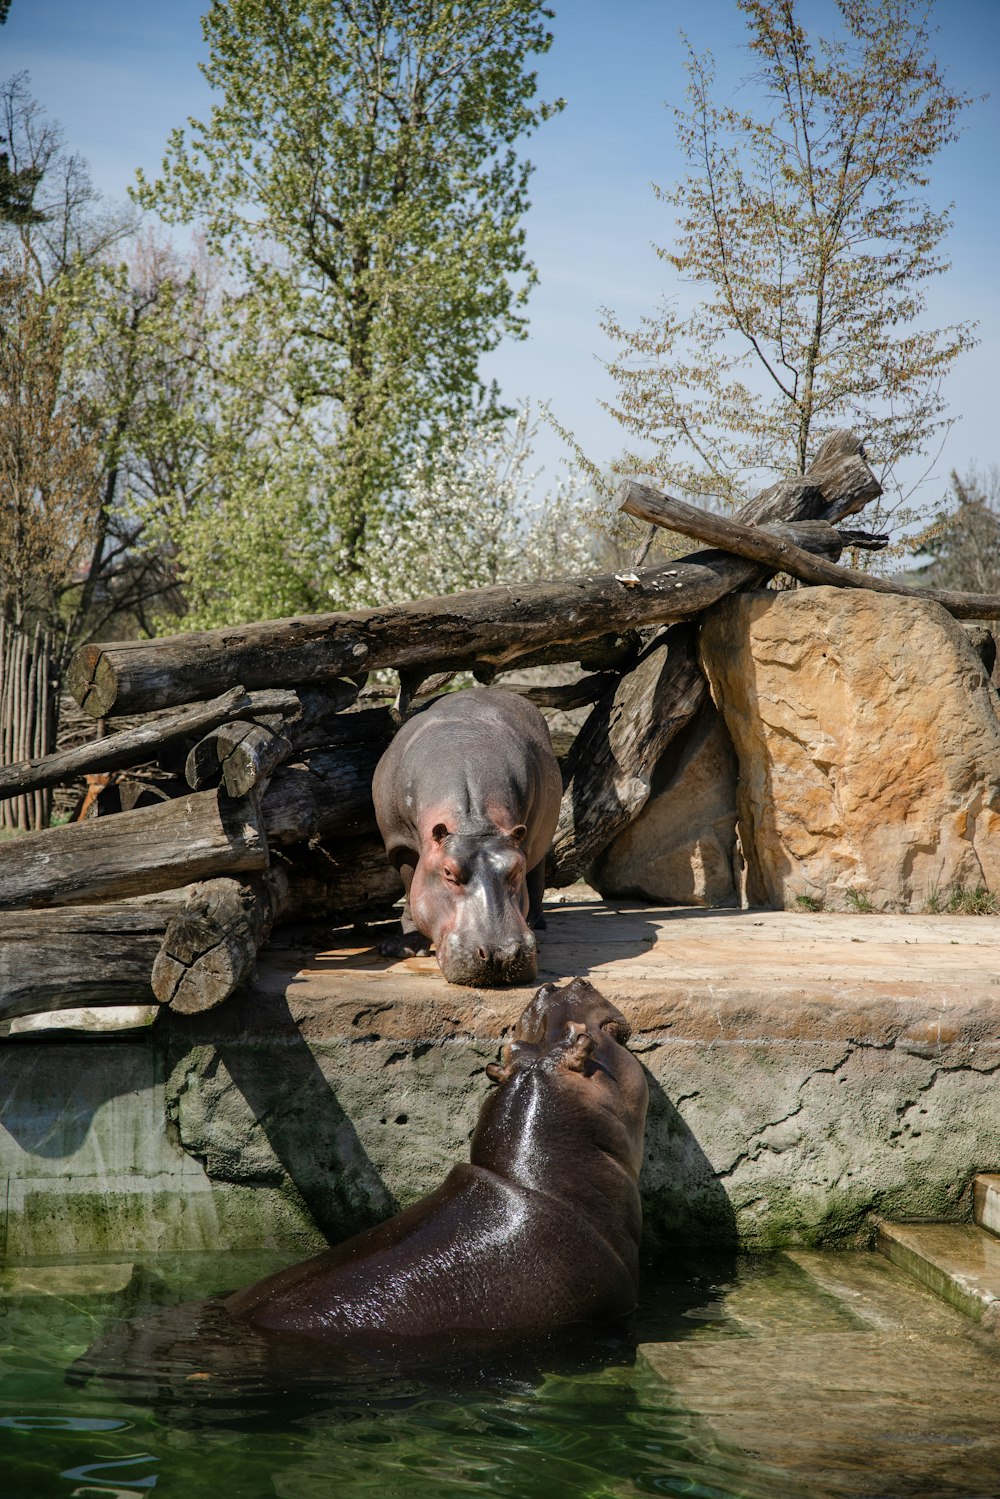 a hippopotamus and a baby hippopotamus in a zoo enclosure